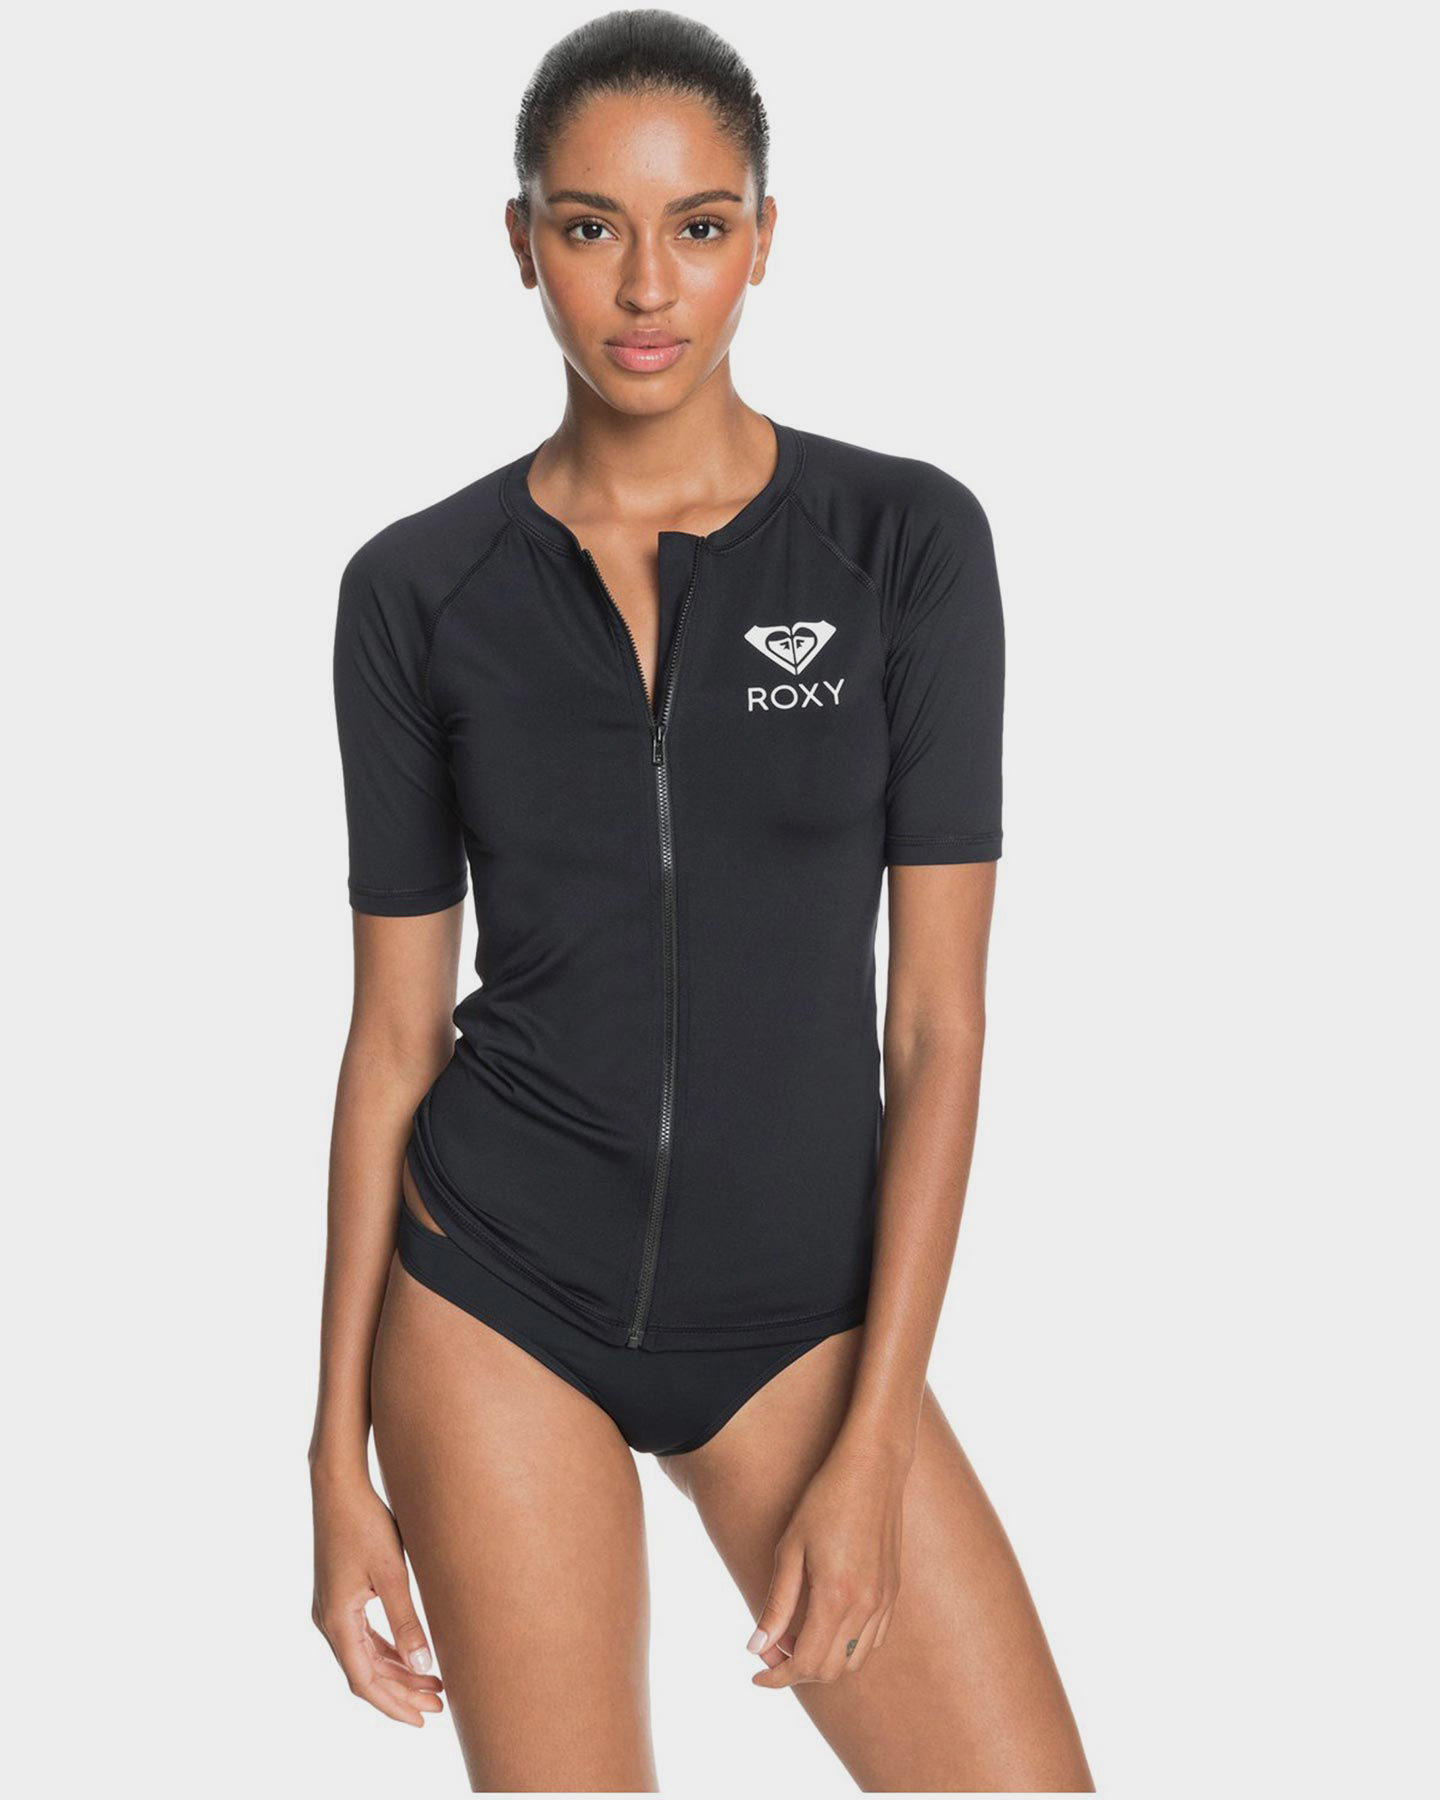 Roxy Womens Essentials Short Sleeve Zipped Upf 50 Rash Vest - Anthracite